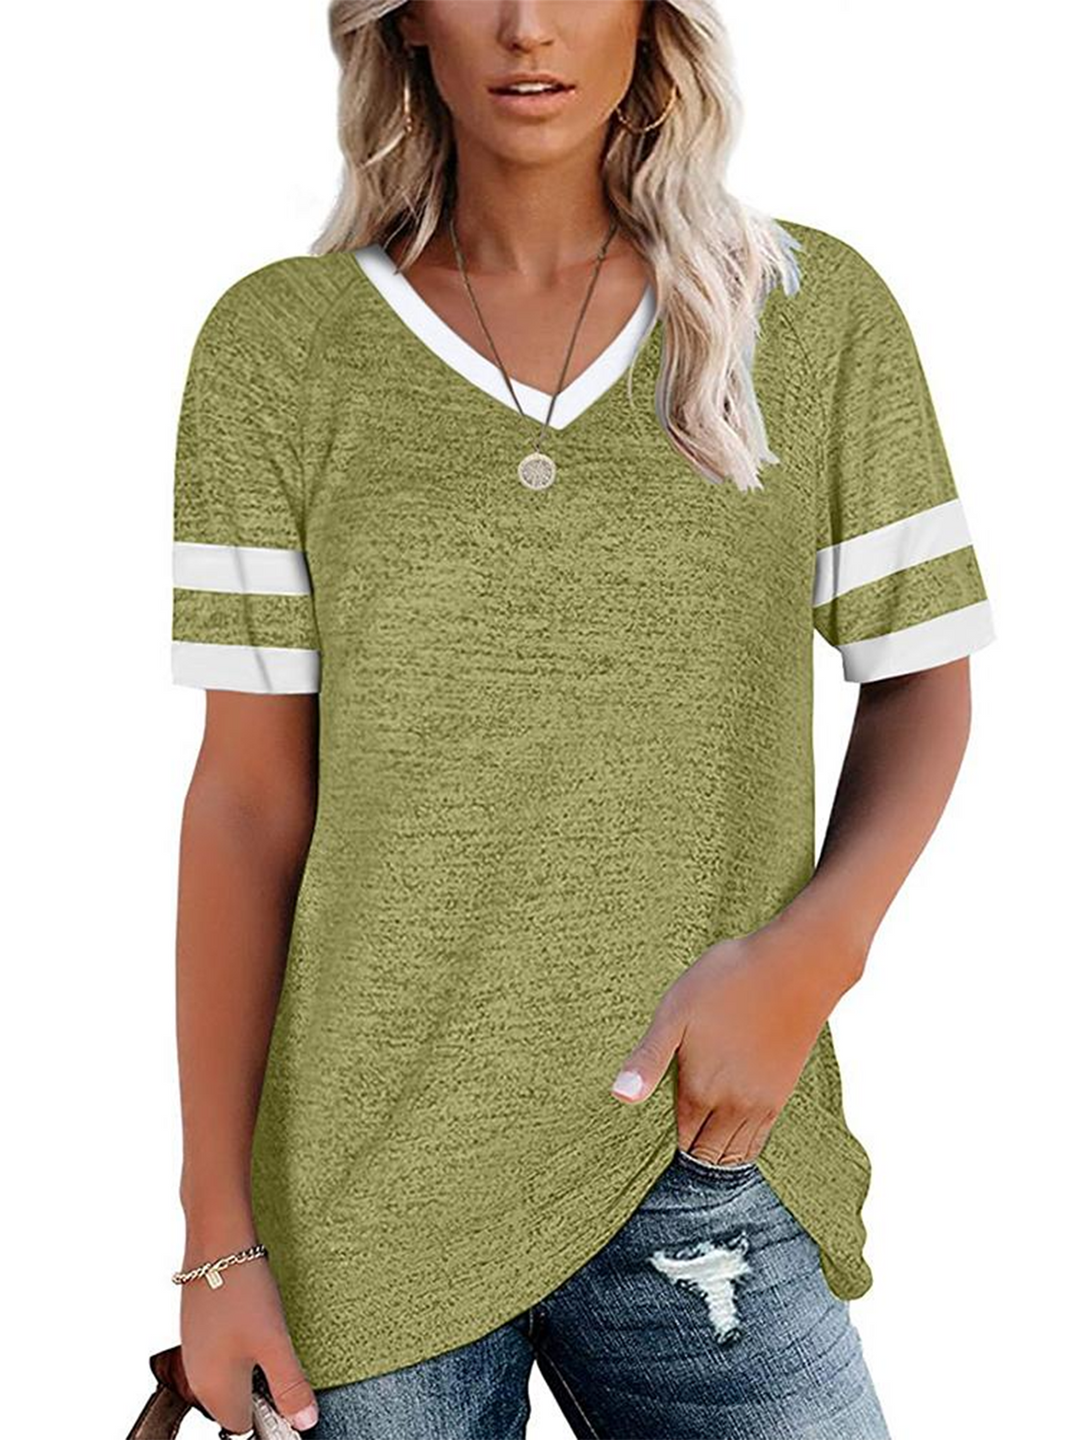 Women's Summer T-shirt Color Block Casual Short Sleeve Tee